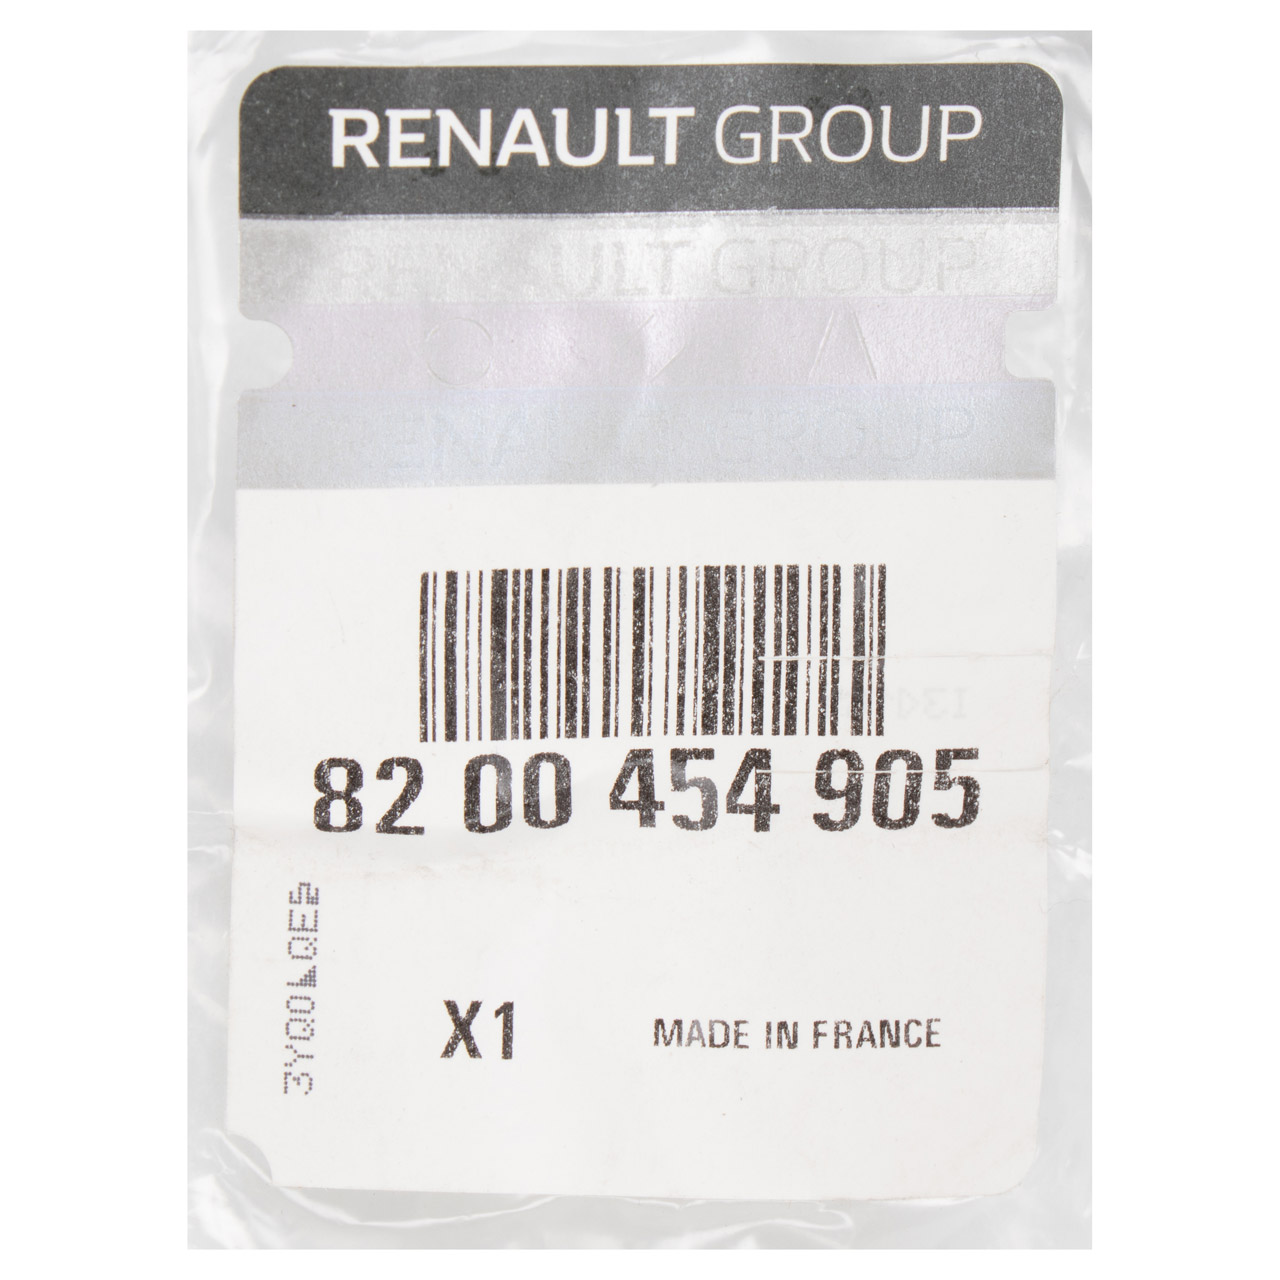 ORIGINAL Renault Schaltknauf Schalthebel 5-Gang Schaltung Kangoo 2 8200454905